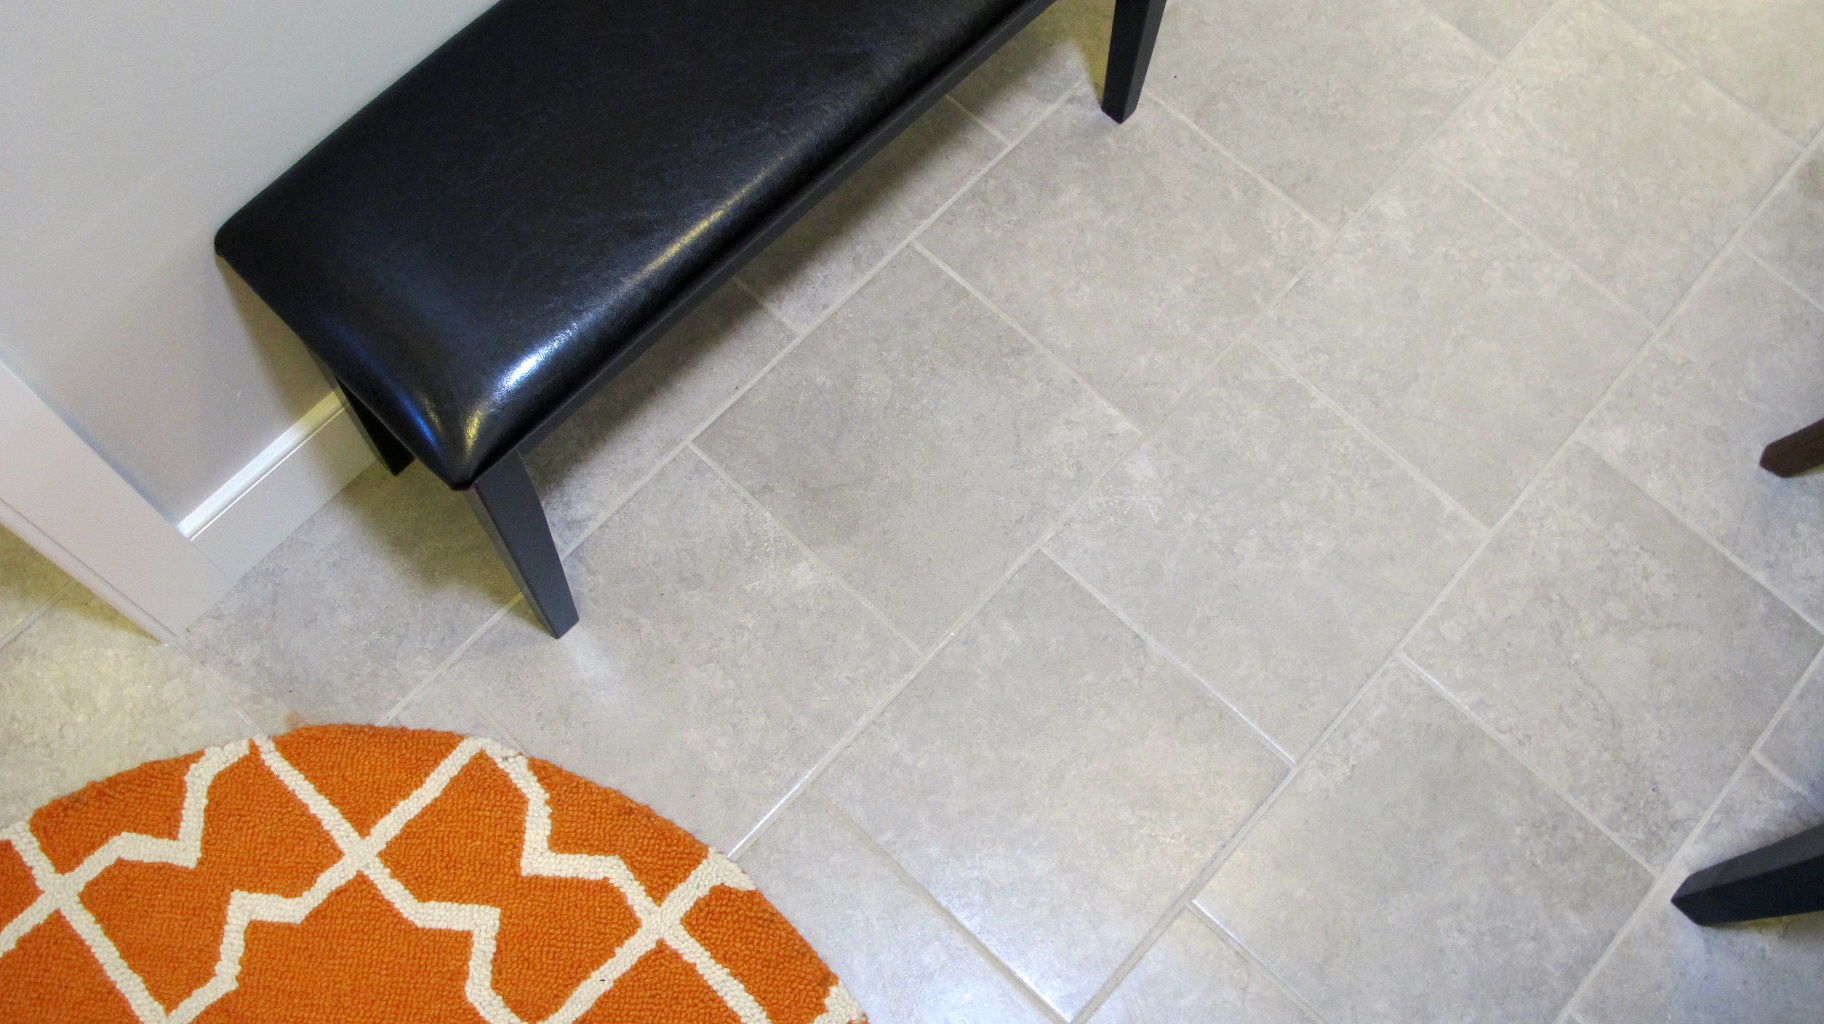 Floor tile Emser Baja 13x13 Tecate porcelain ceramic stagger lay orange decor rug circle black bench gray taupe light contemporary transitional installation